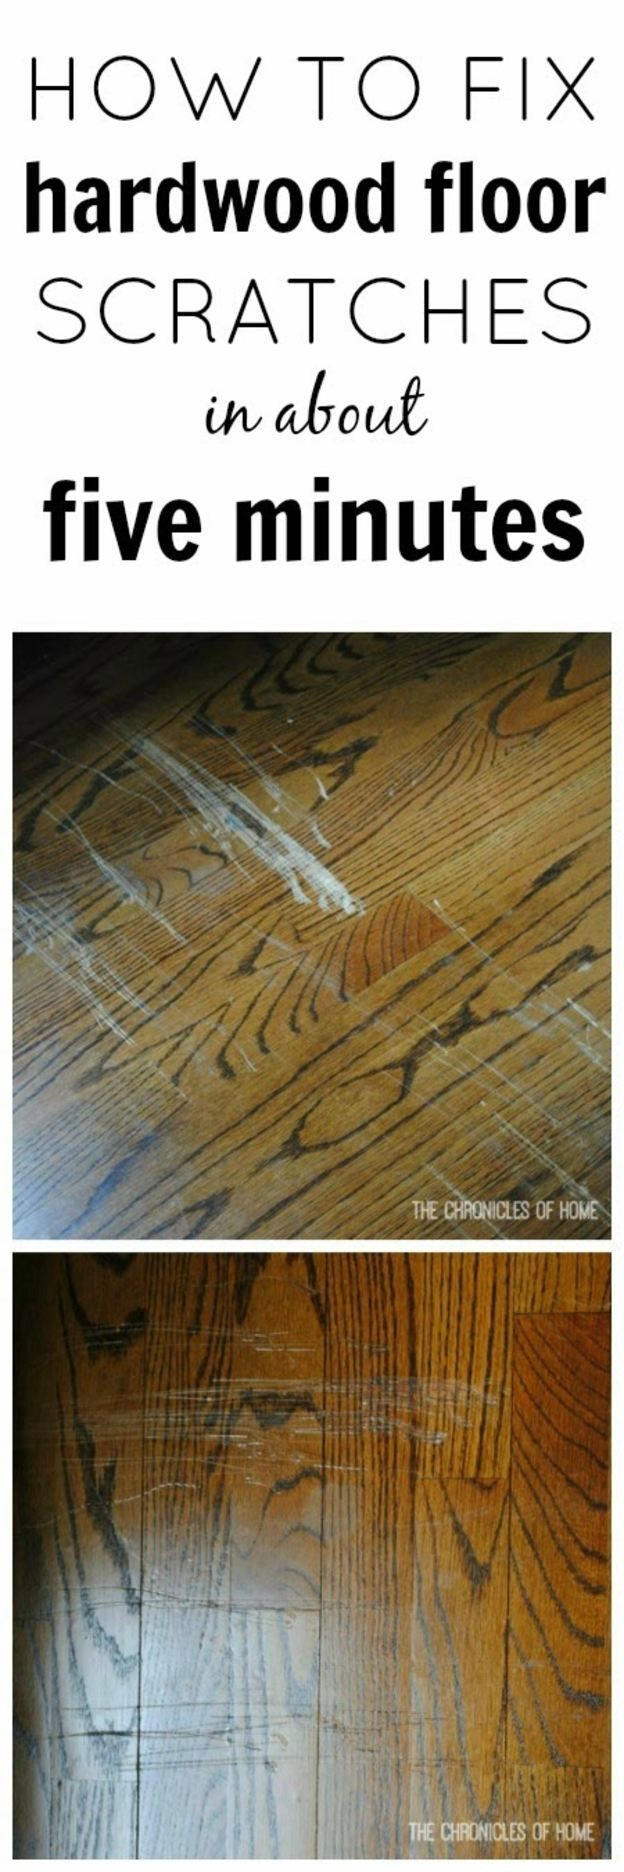 DIY Restore Hardwood Floors
 Fix Scratched Hardwood Floors in About Five MInutes